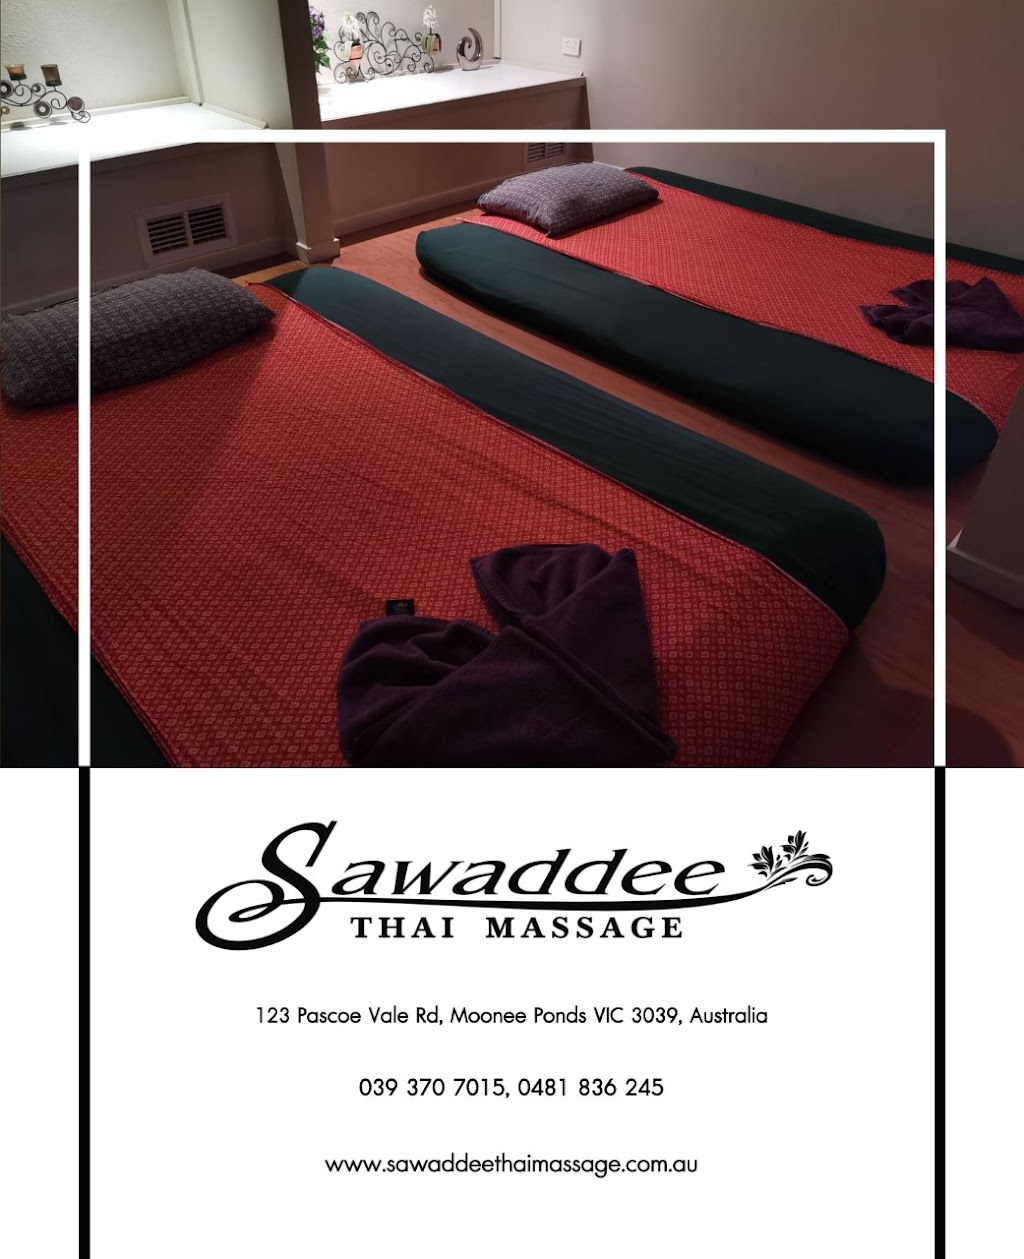 Sawaddee Thai and Remedial Massage Moonee ponds | 123 Pascoe Vale Rd, Moonee Ponds VIC 3039, Australia | Phone: 0481 836 245